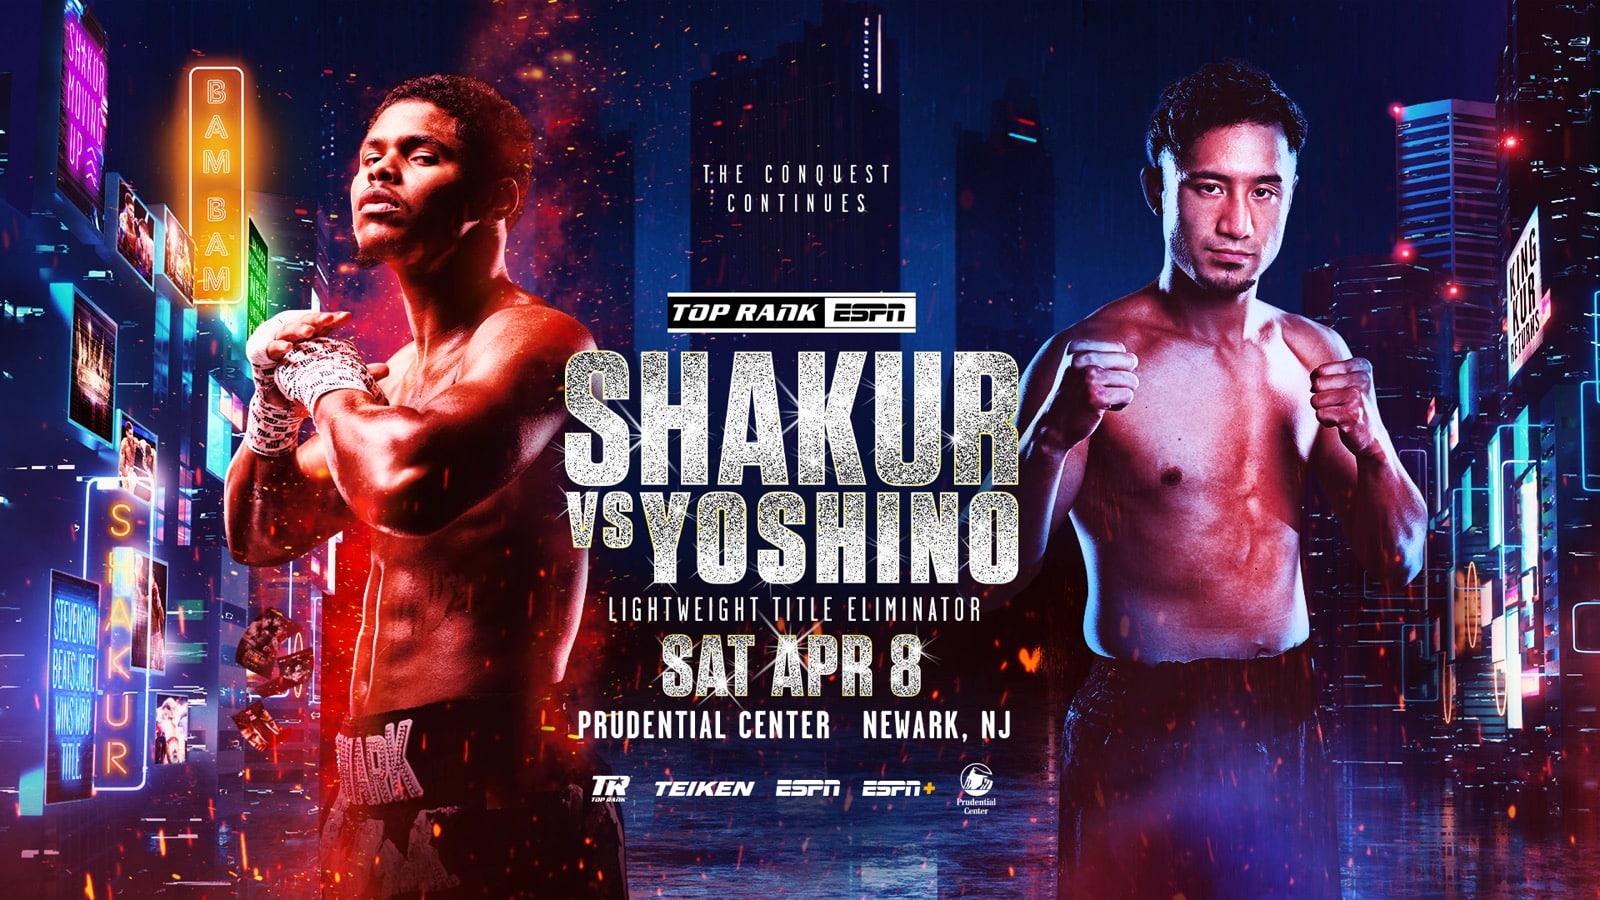 How to Stream Shakur Stevenson vs. Shuichiro Yoshino - Details